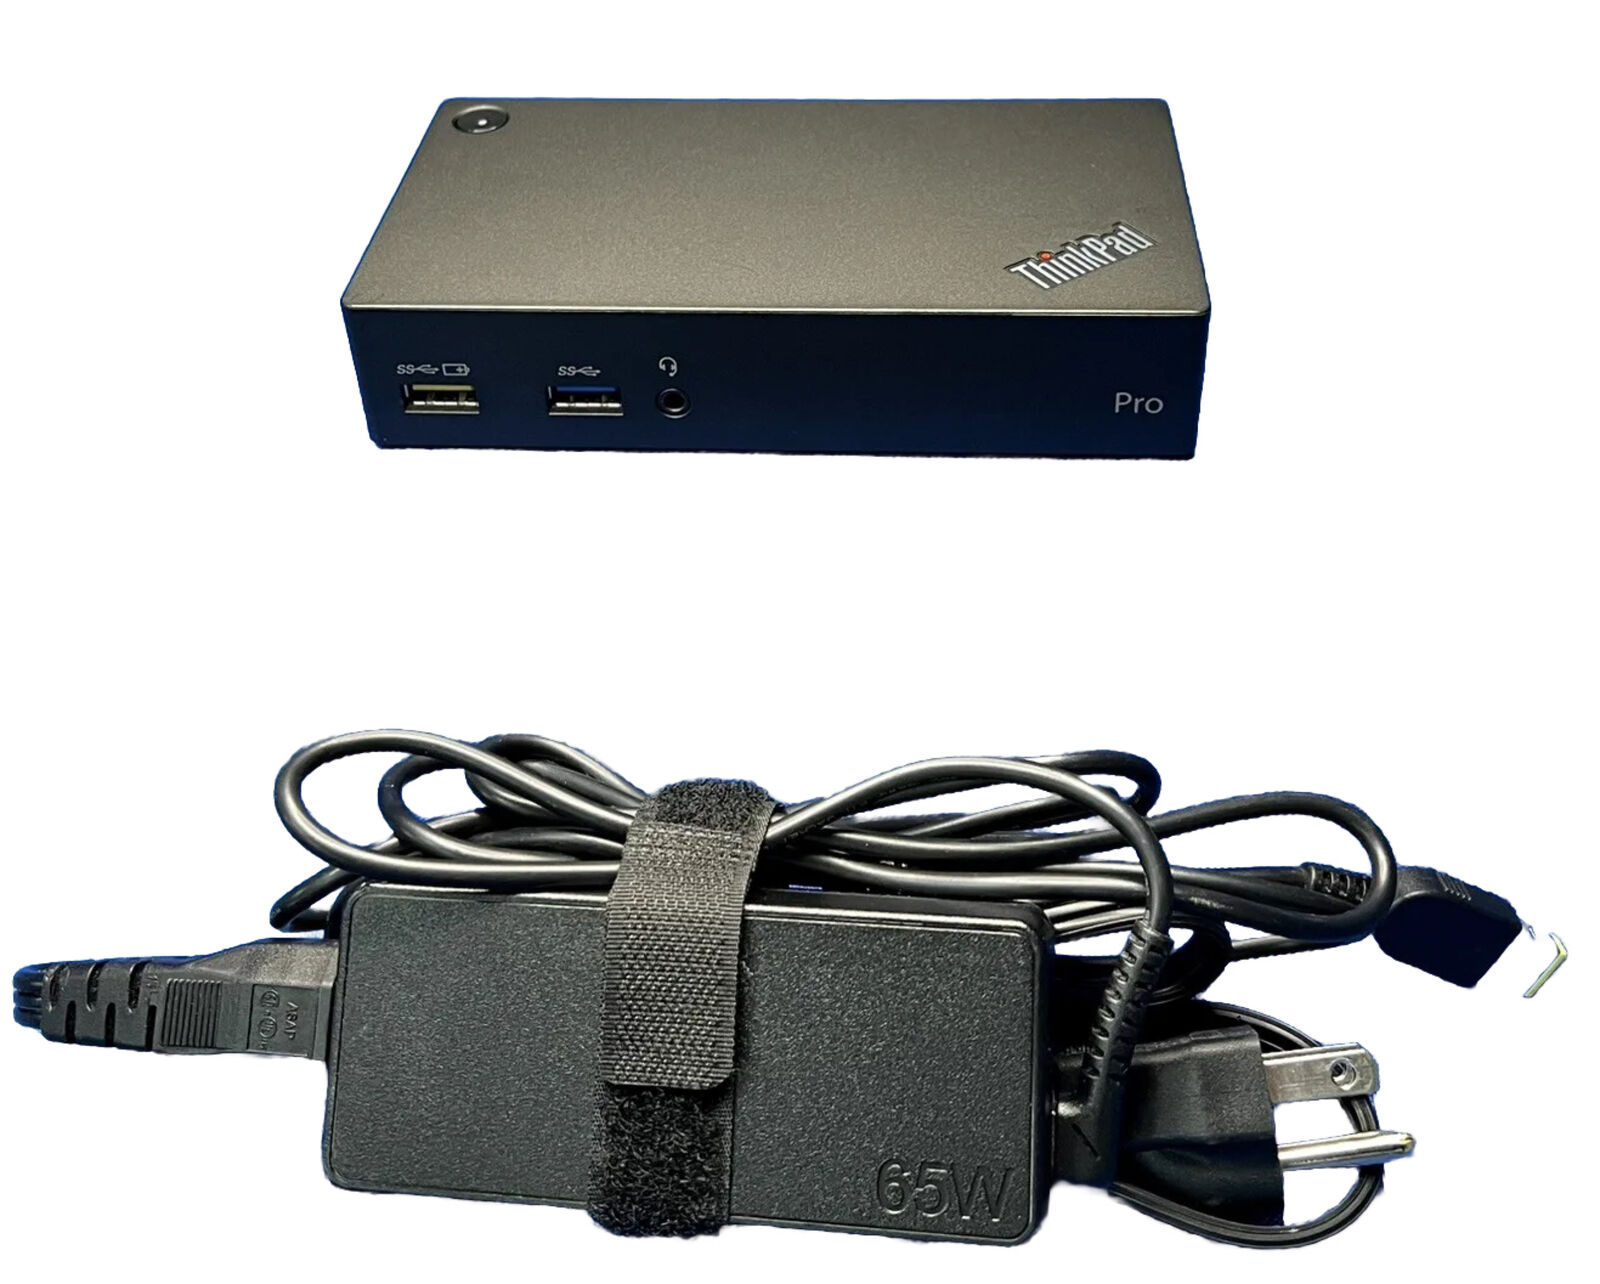 Lenovo ThinkPad USB 3.0 Pro Docking Station 40A7 and Power Supply